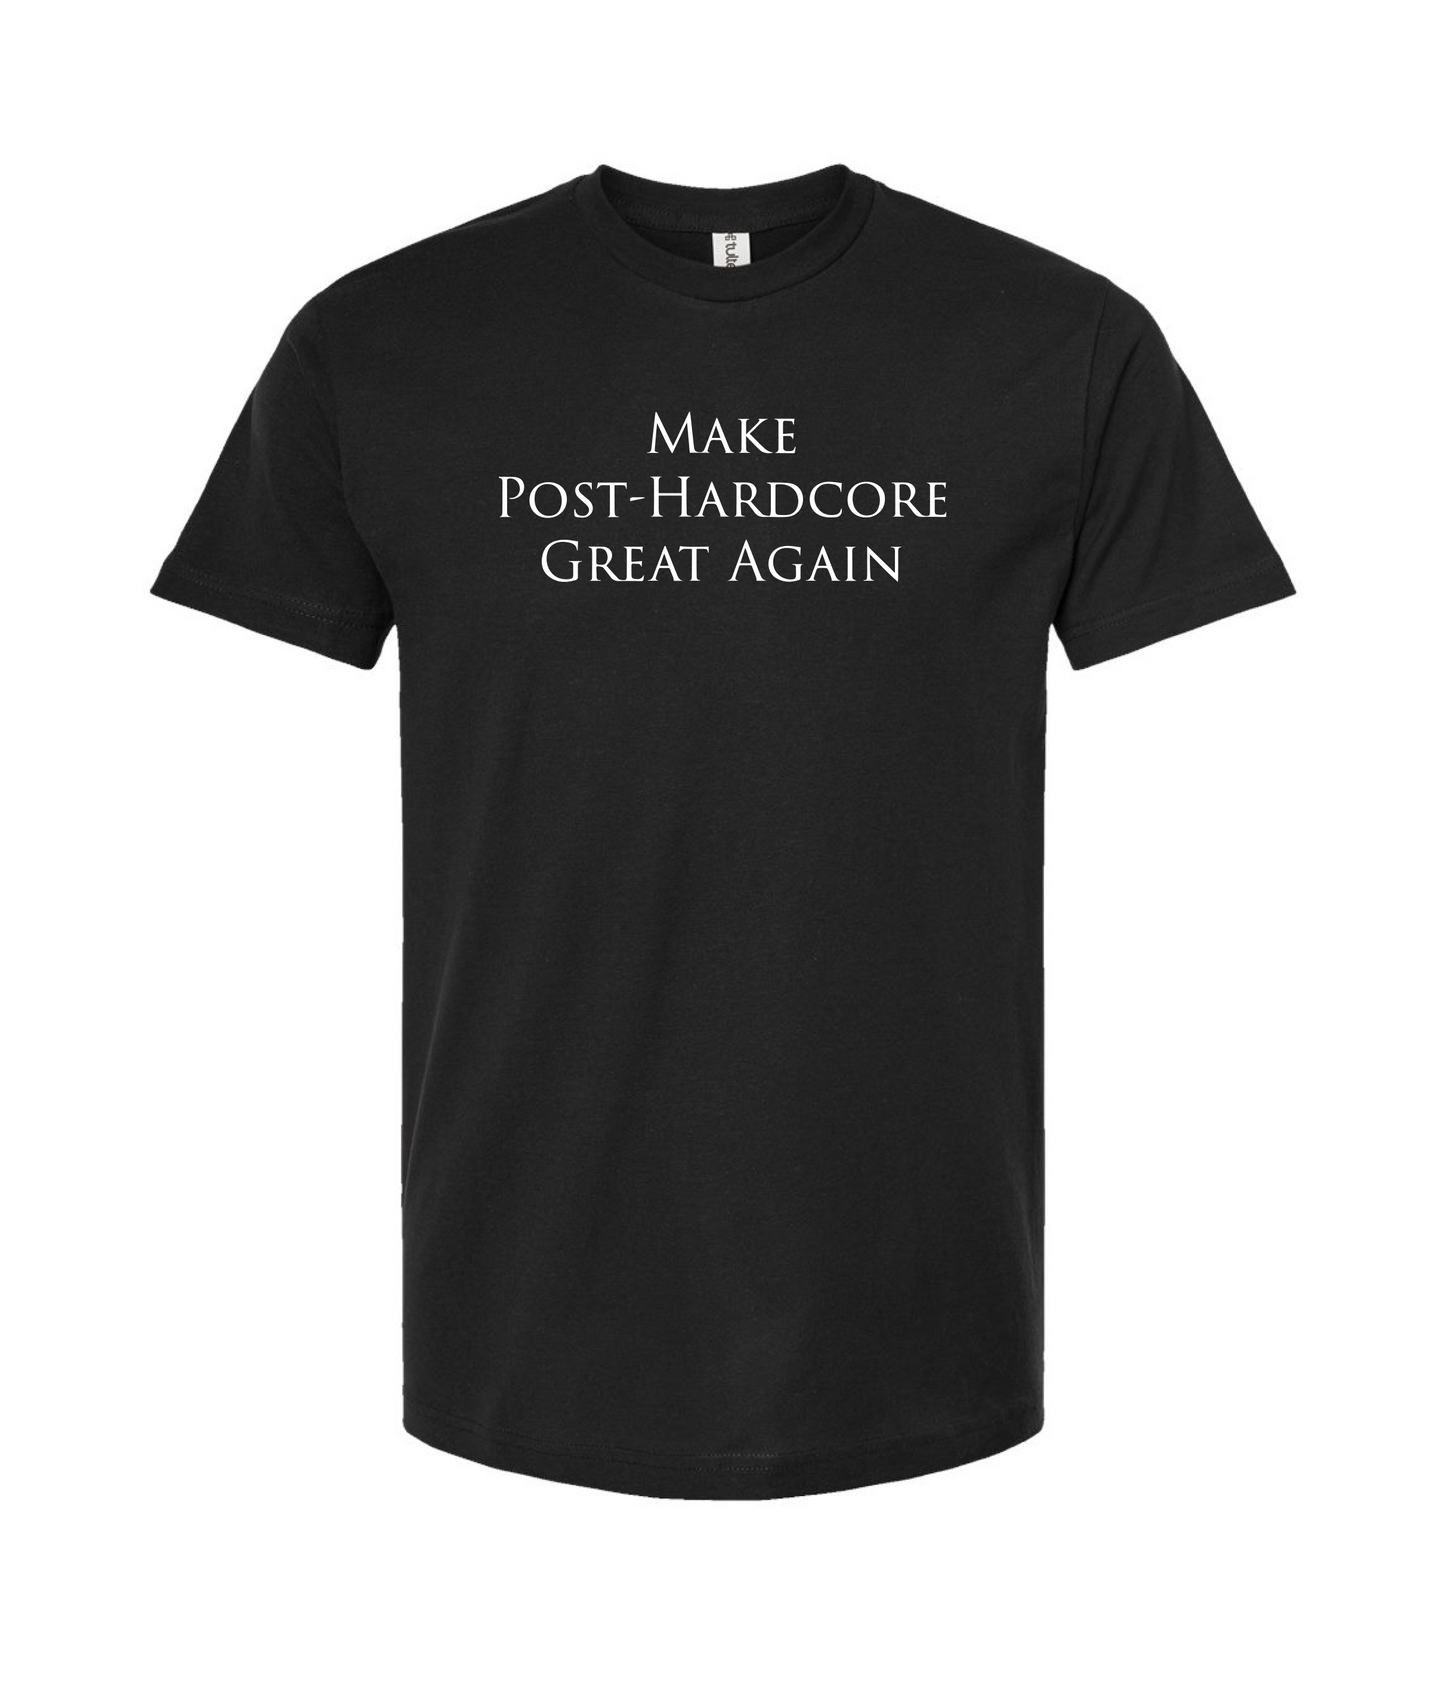 After Dark AZ - Make Post-Hardcore Great Again - Black T-Shirt